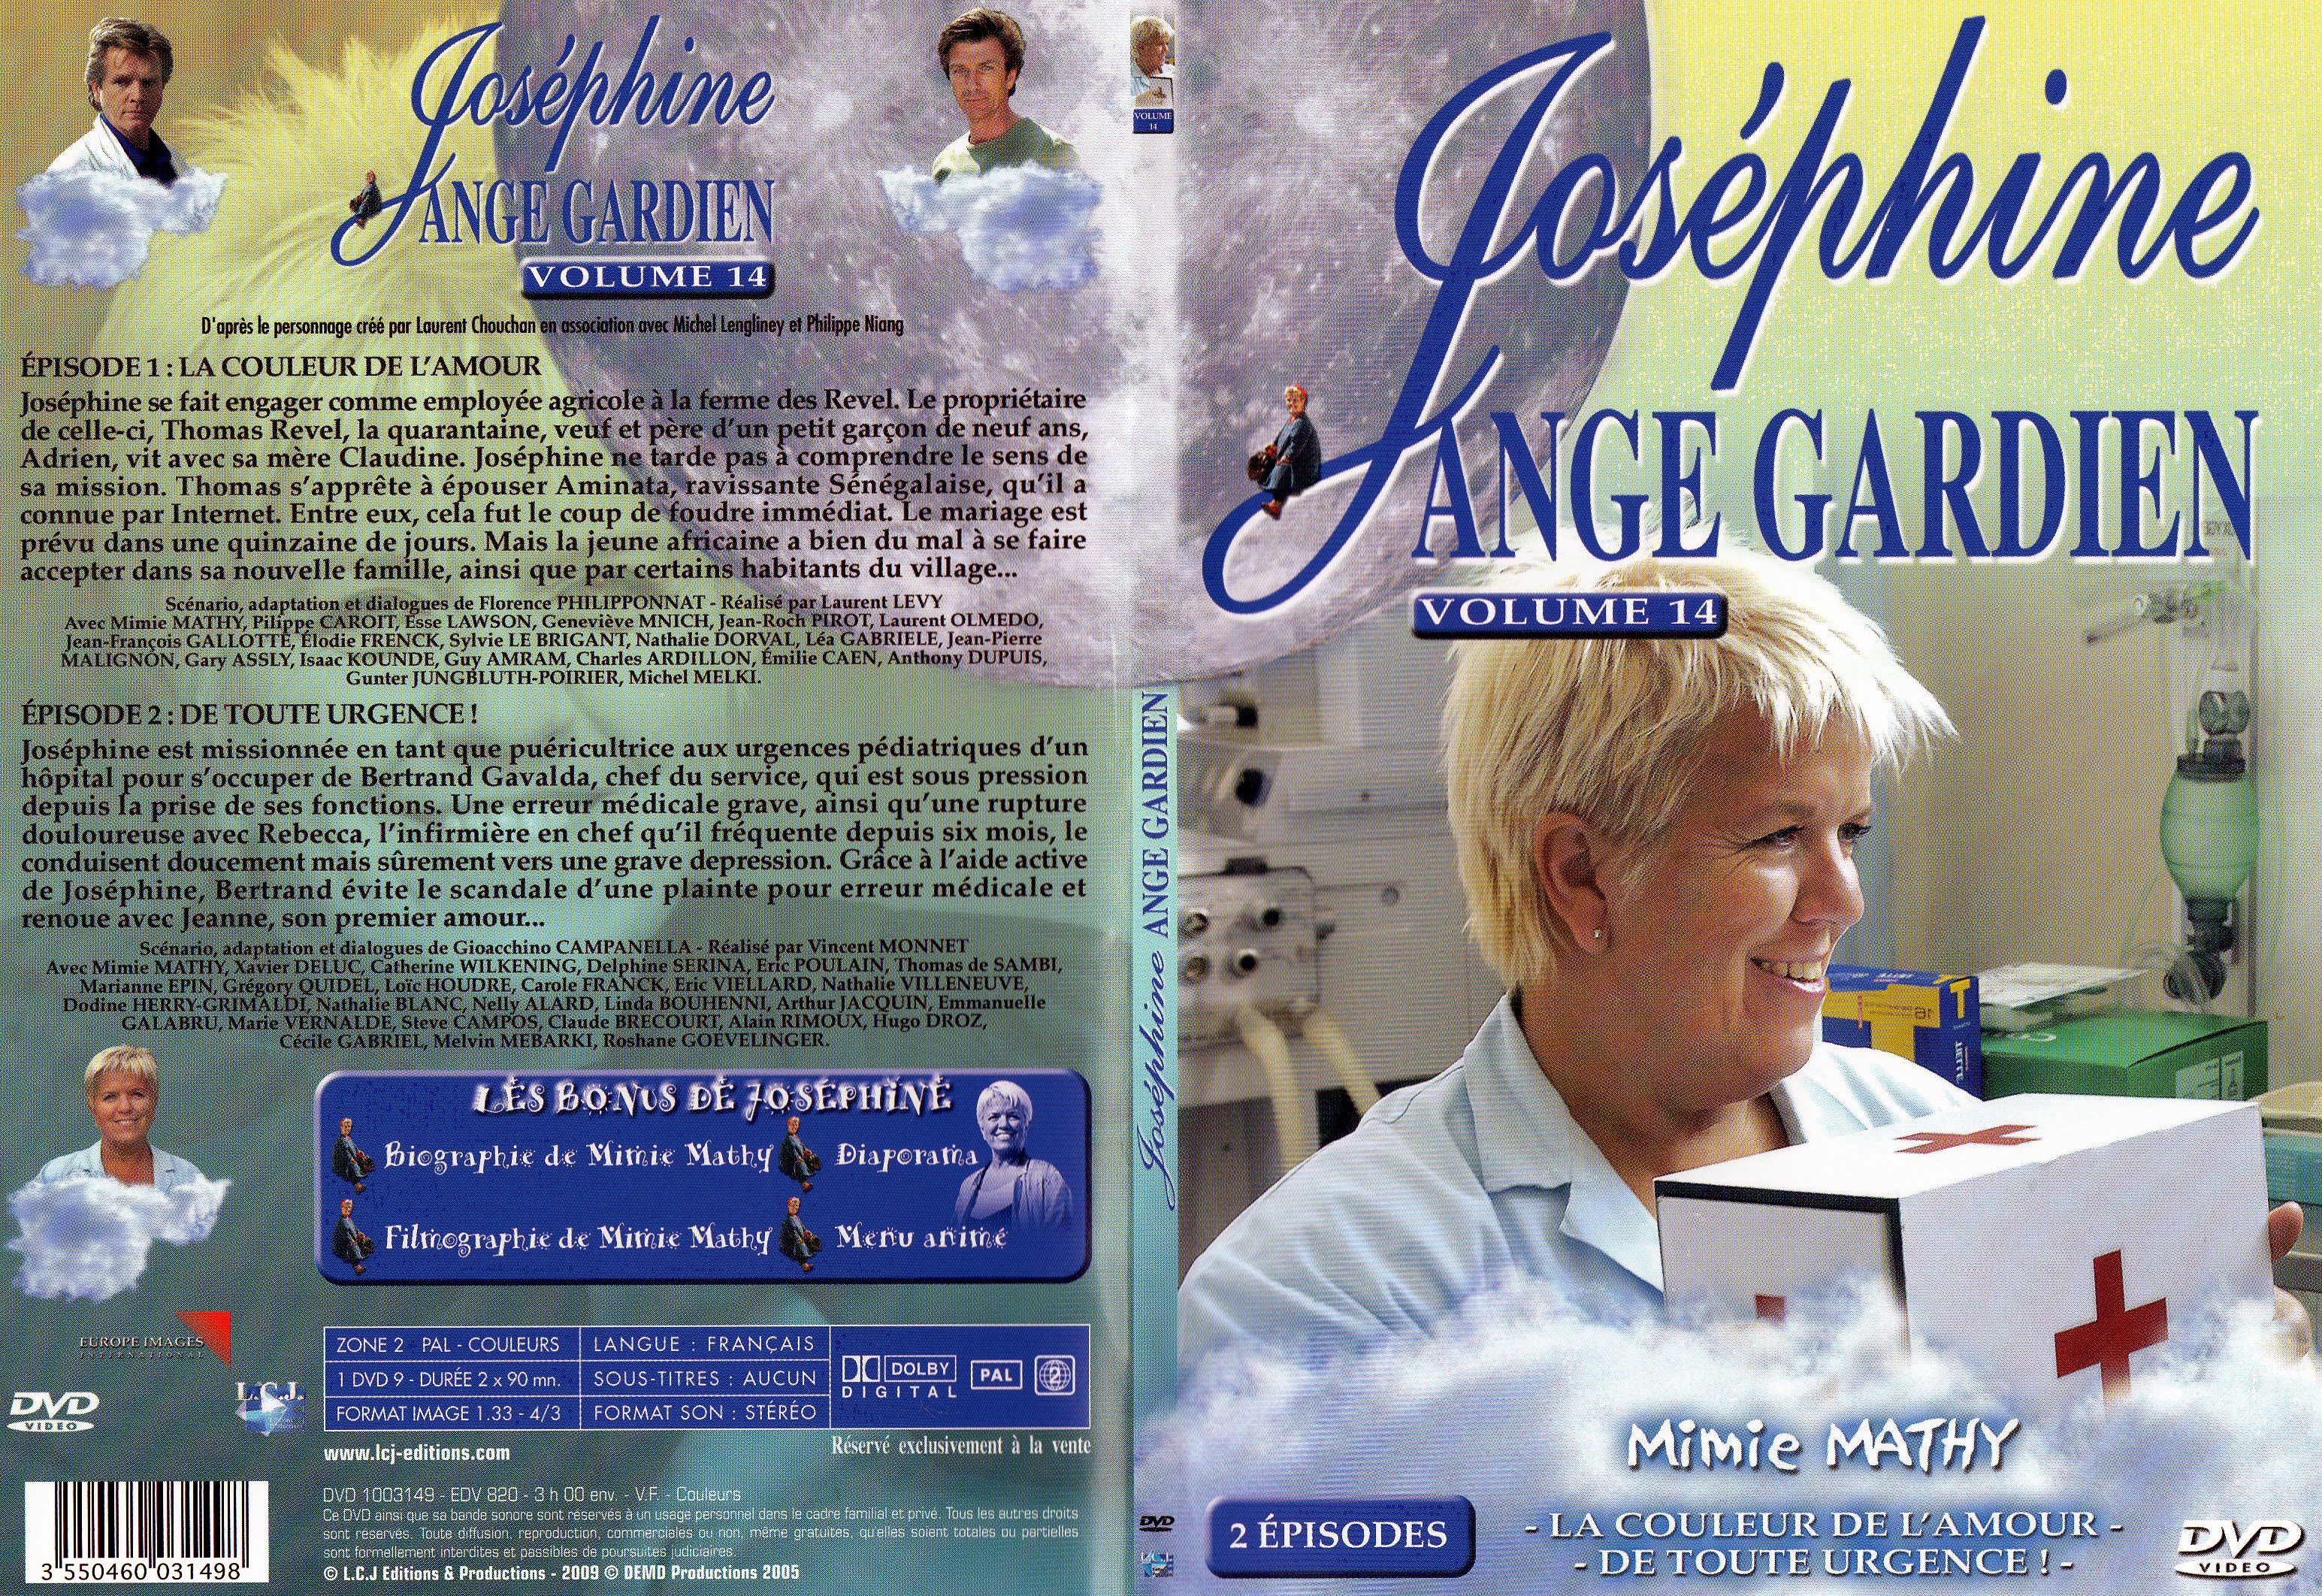 Jaquette DVD Josphine Ange Gardien saison 3 DVD 14